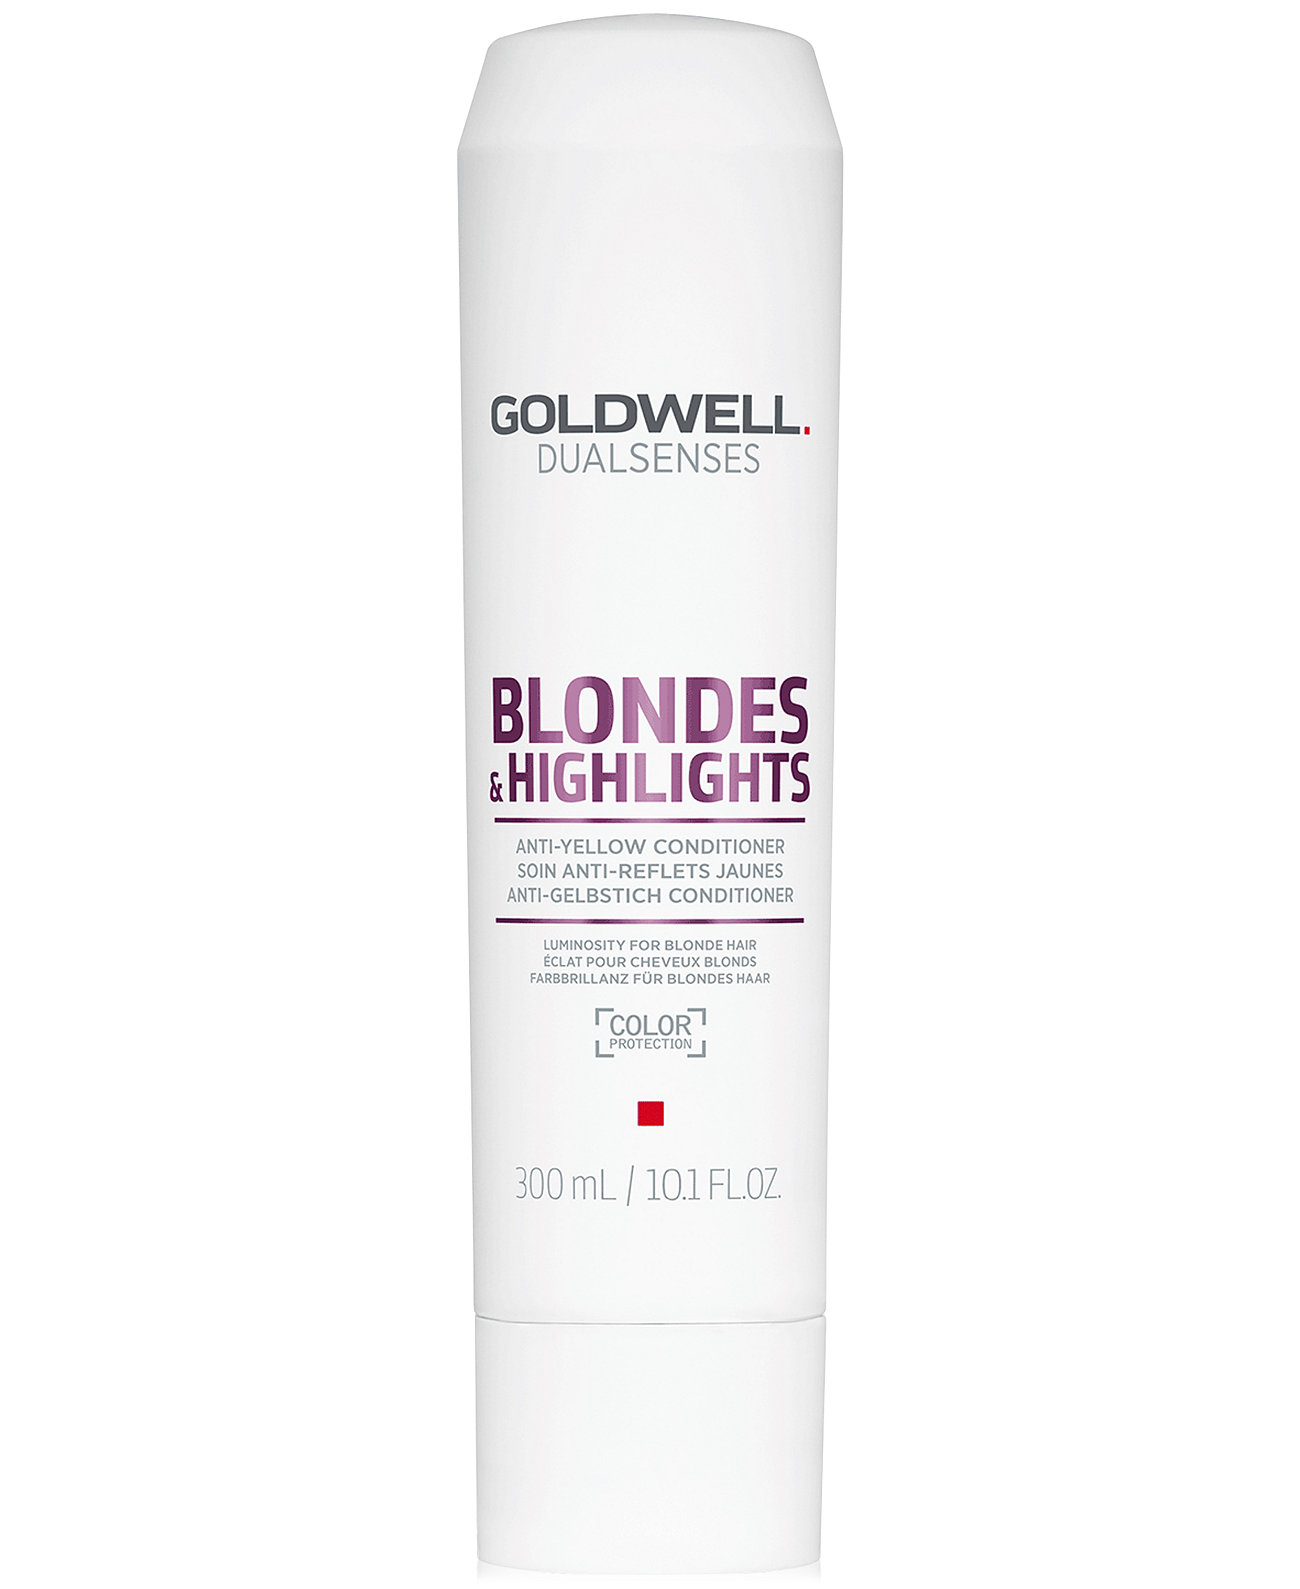 Кондиционер против желтизны DualSenses Blondes & Highlights, 10,1 унции, от PUREBEAUTY Salon & Spa Goldwell